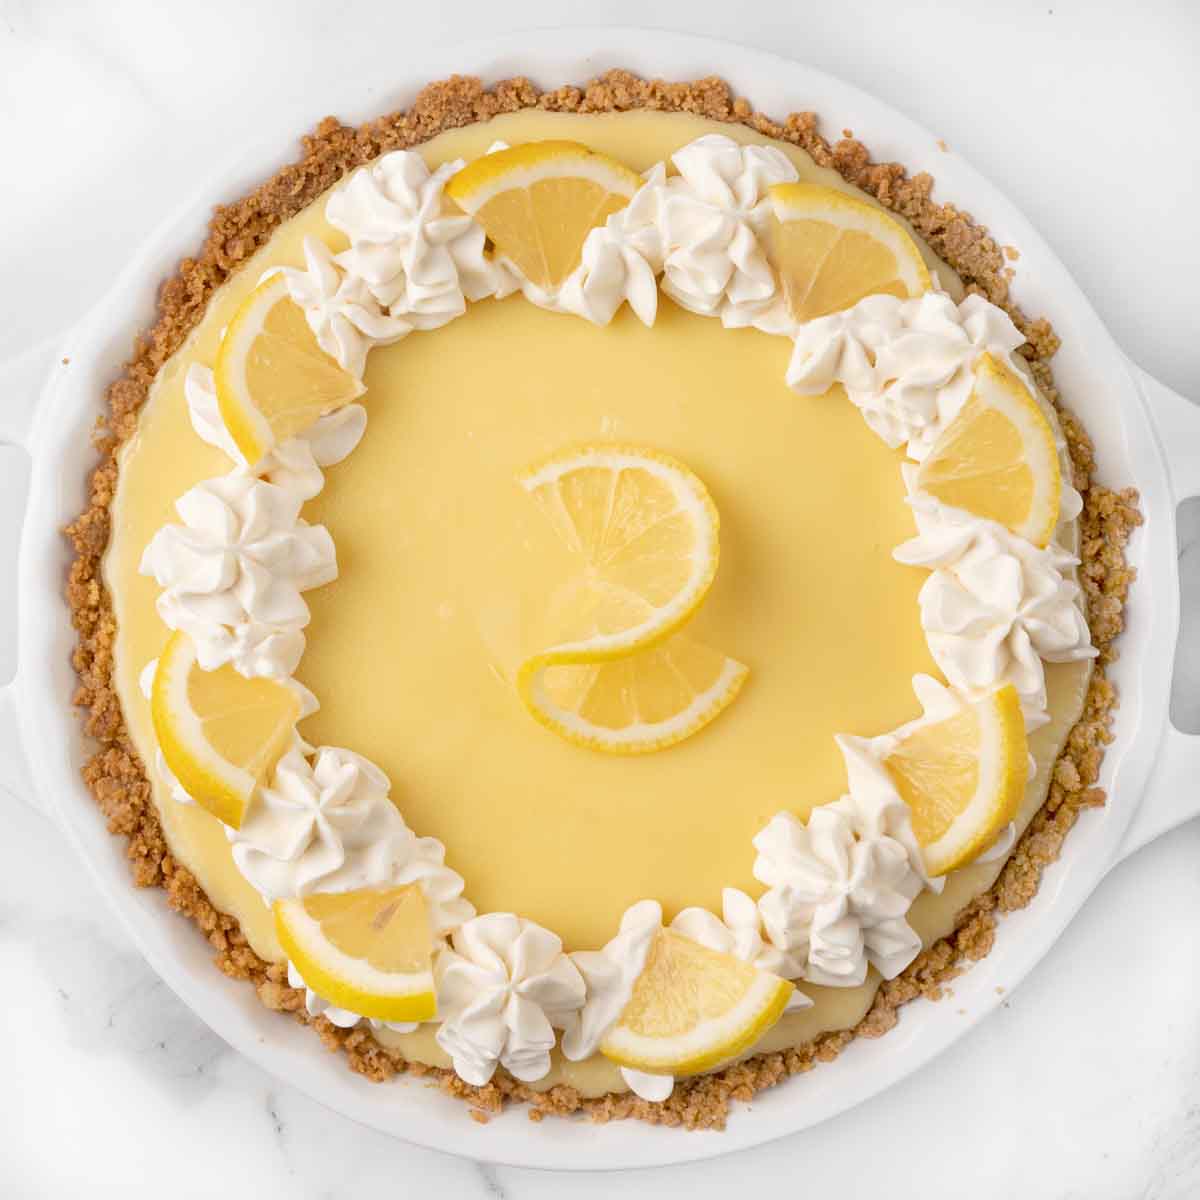 Lemon Cream pie with whipped cream and lemon slices